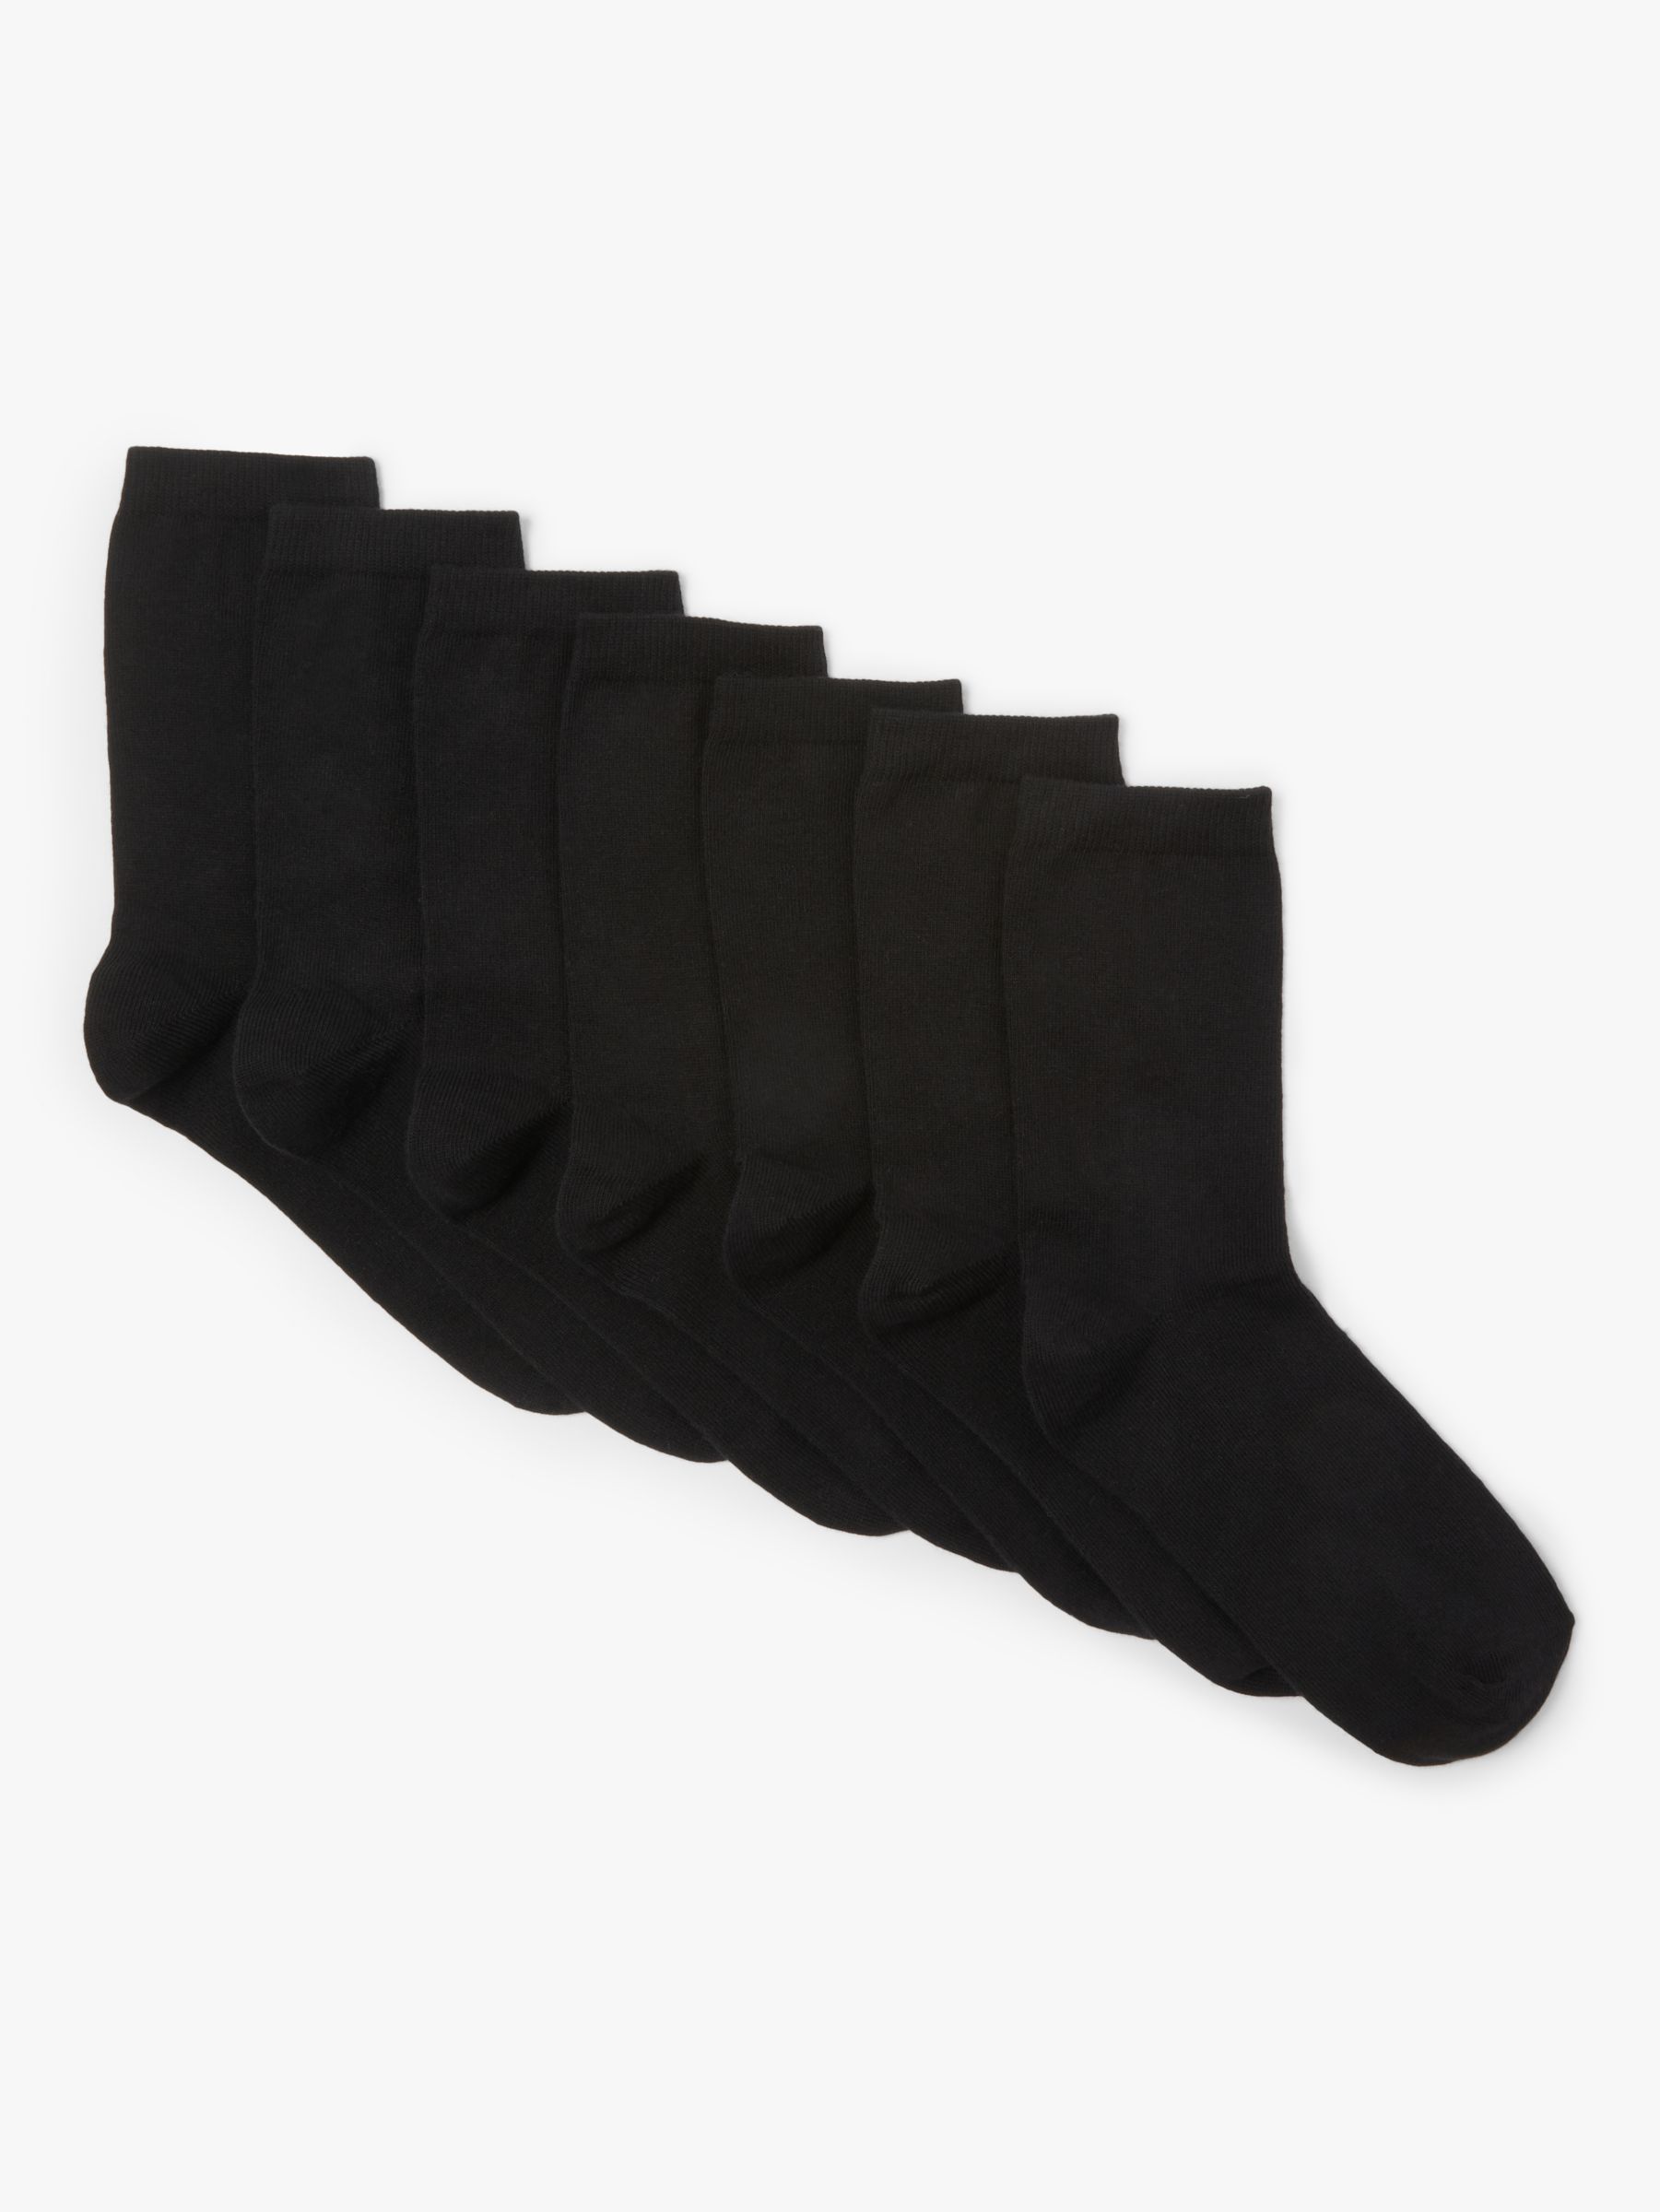 John Lewis Kids' Cotton Rich Socks, Pack of 7, Black, 6-8.5 Jnr